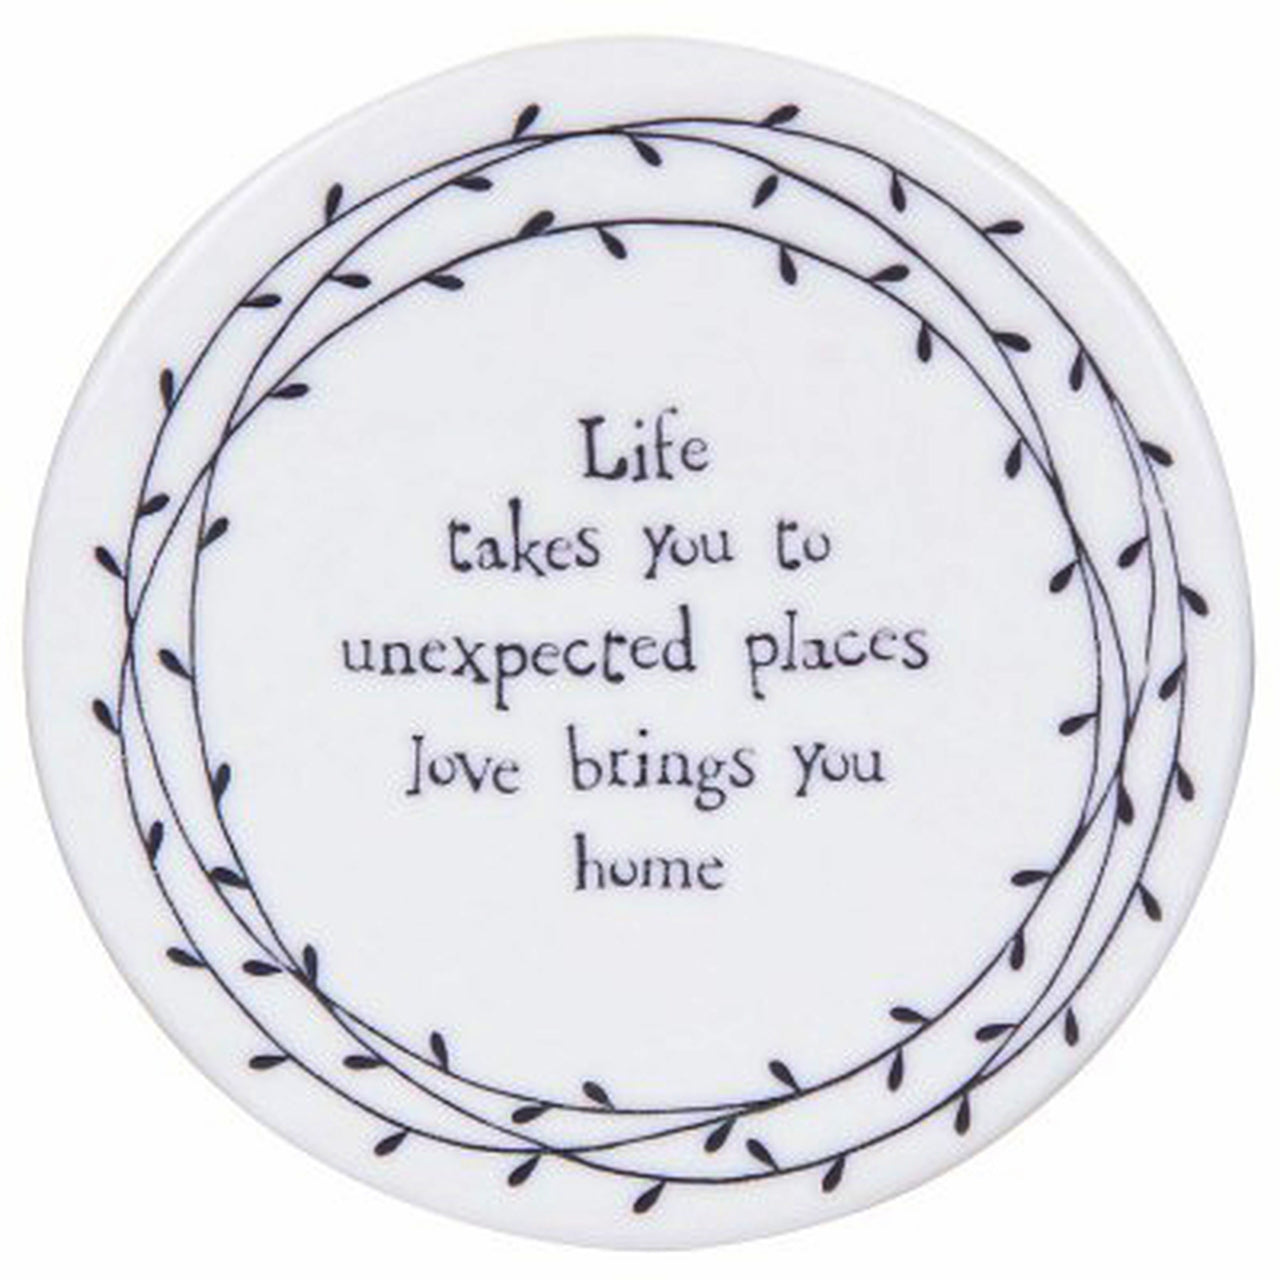 East of India Porcelain Round Leaf Coaster - Life Takes You